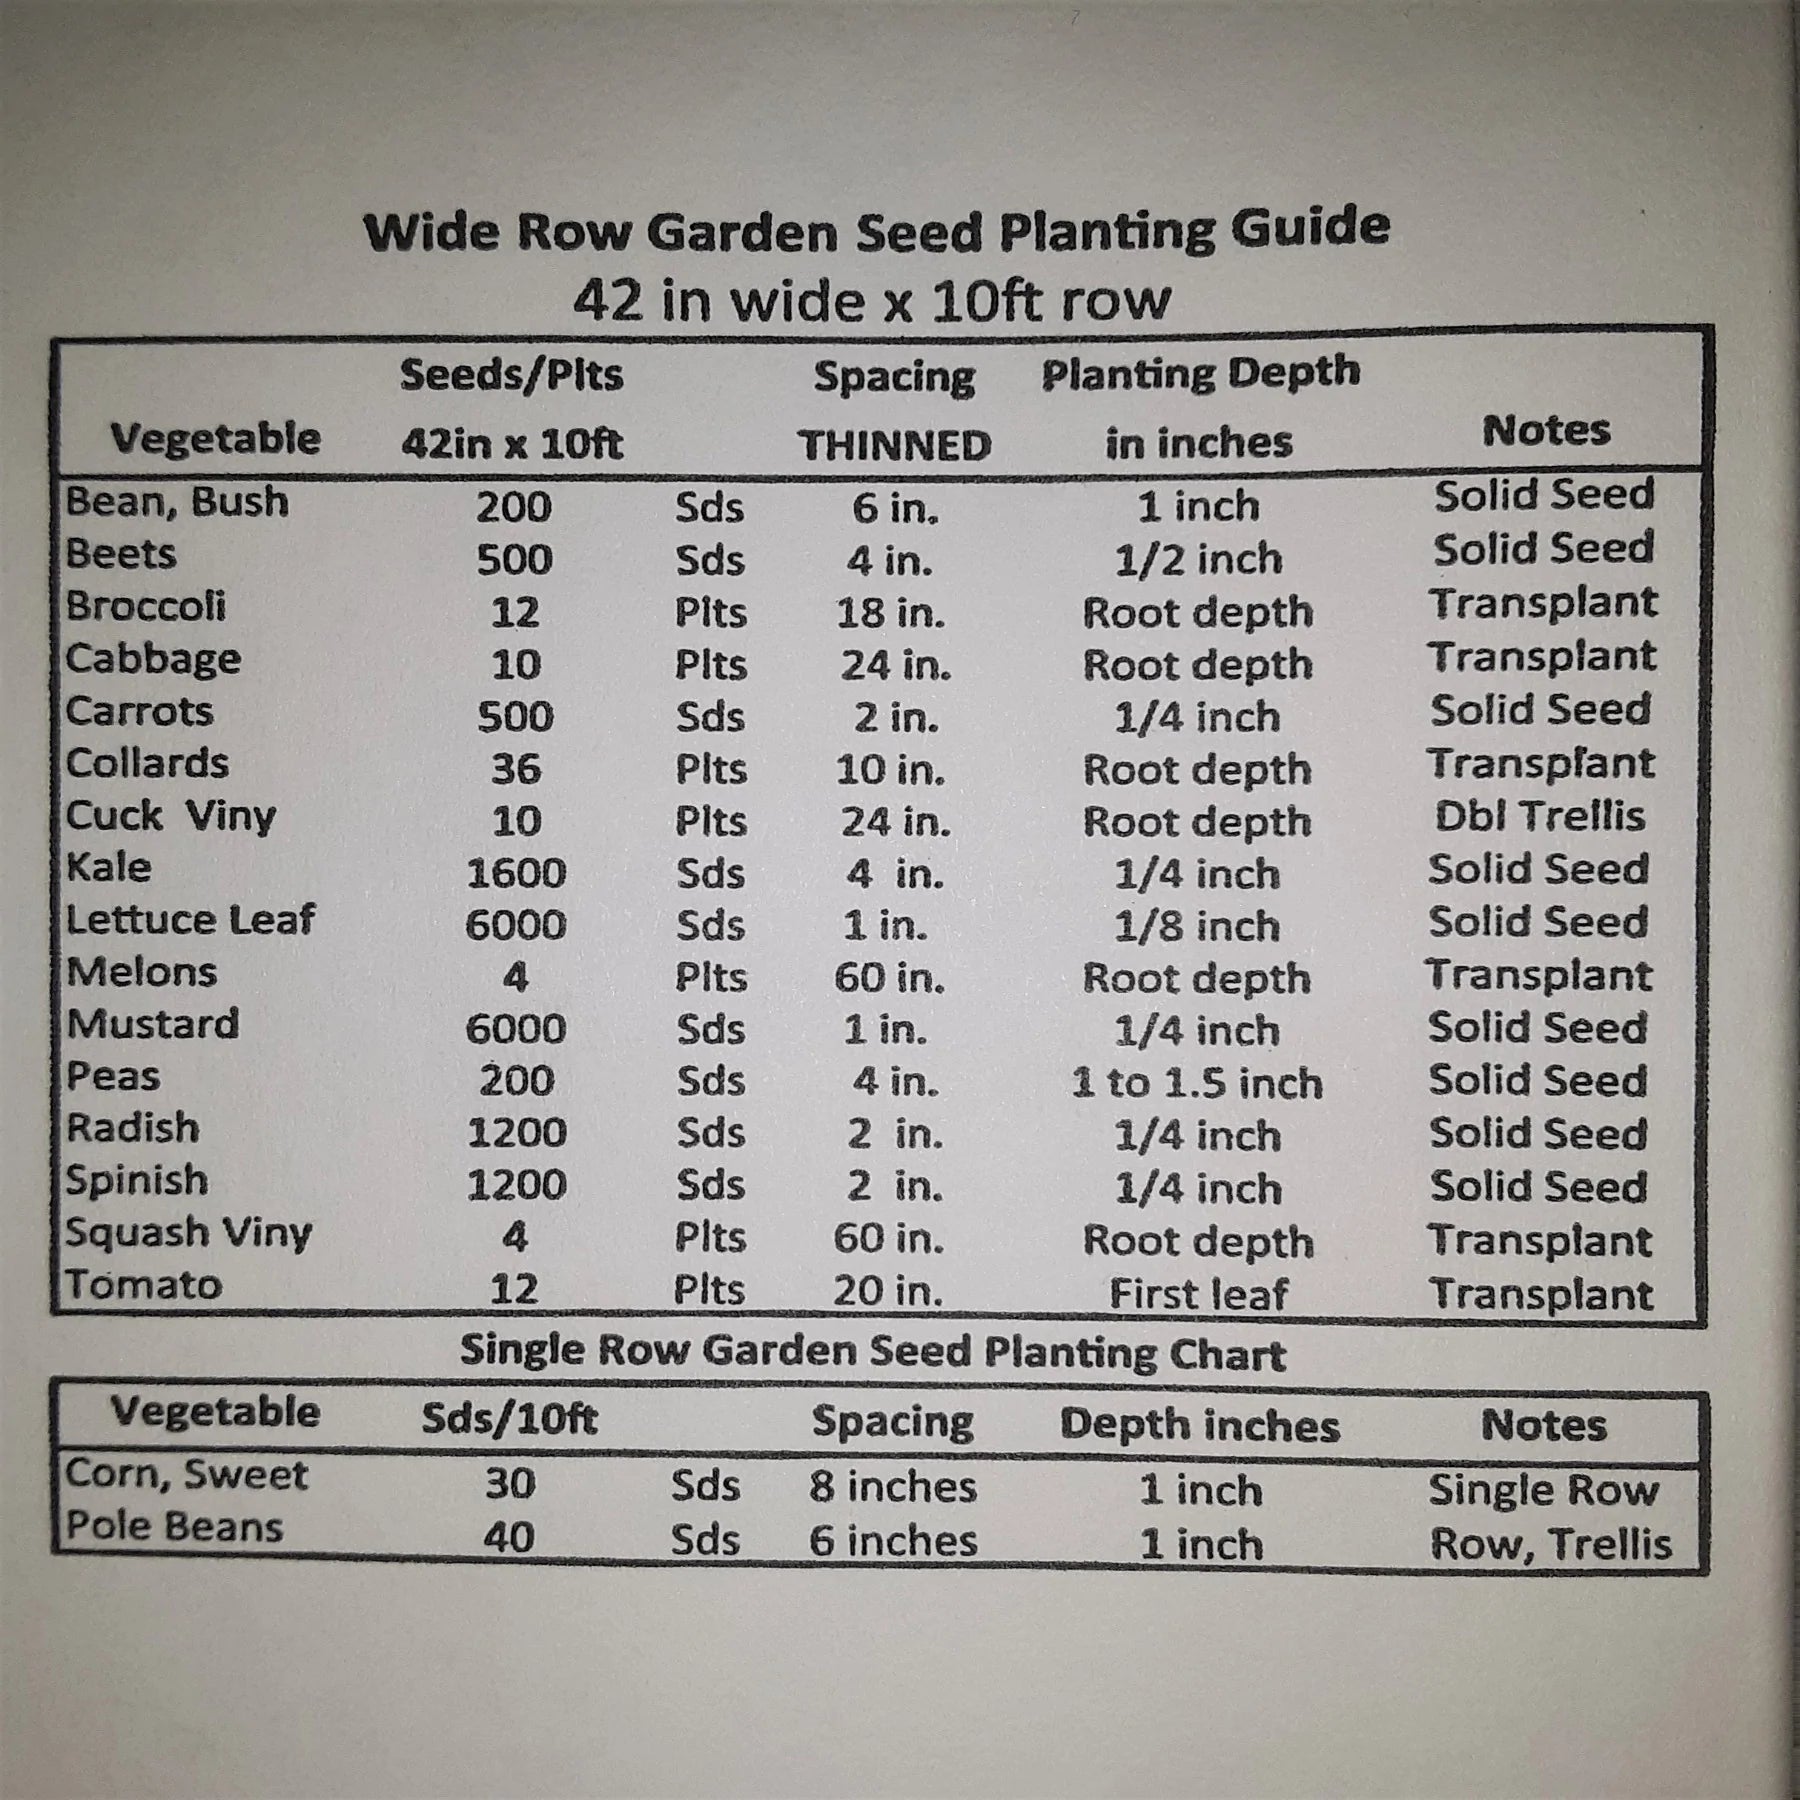 Twister Hybrid Cauliflower Seeds